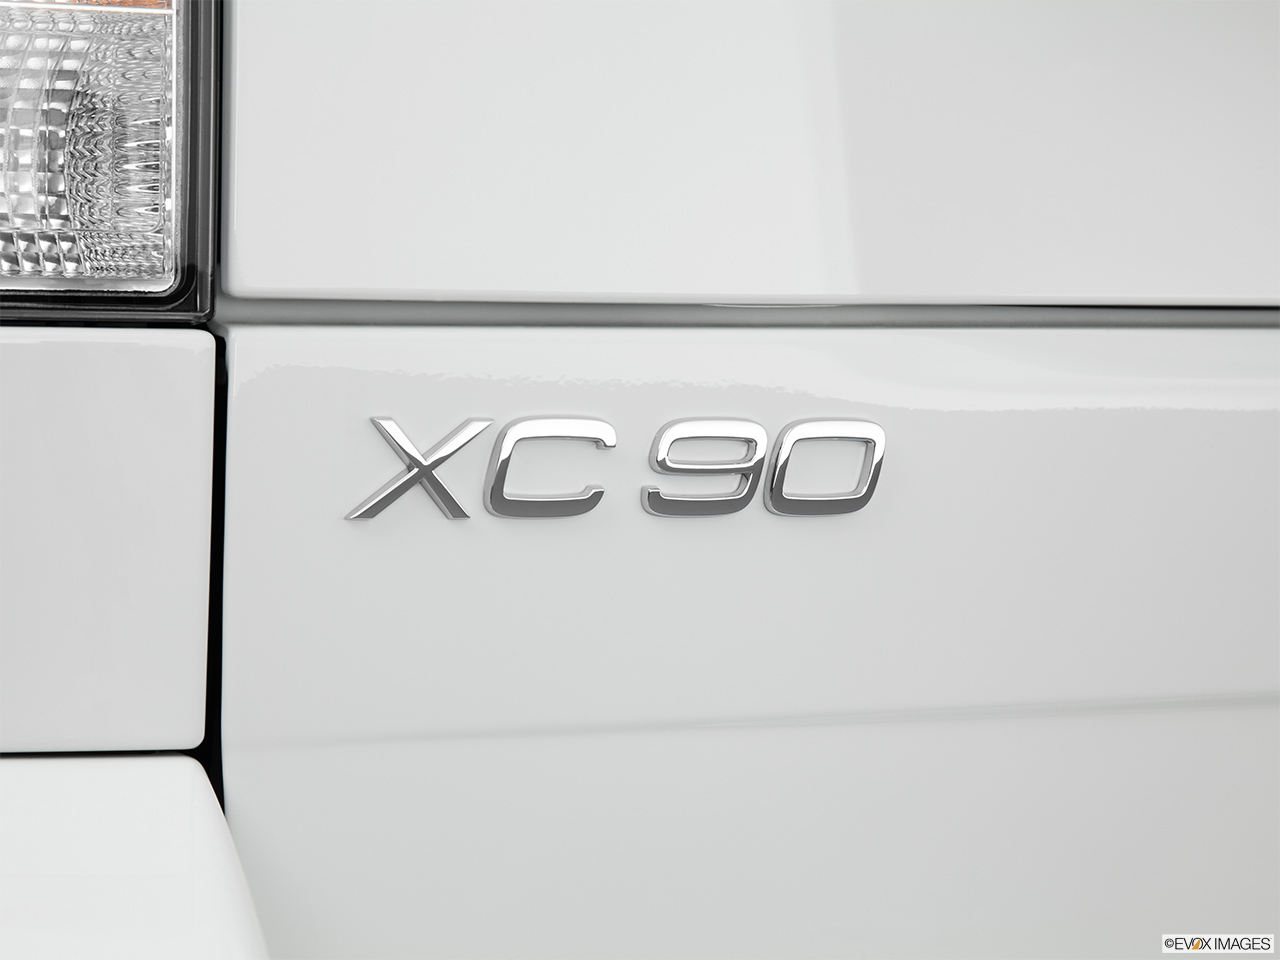 2012 Volvo XC90 R-Design Rear model badge/emblem 